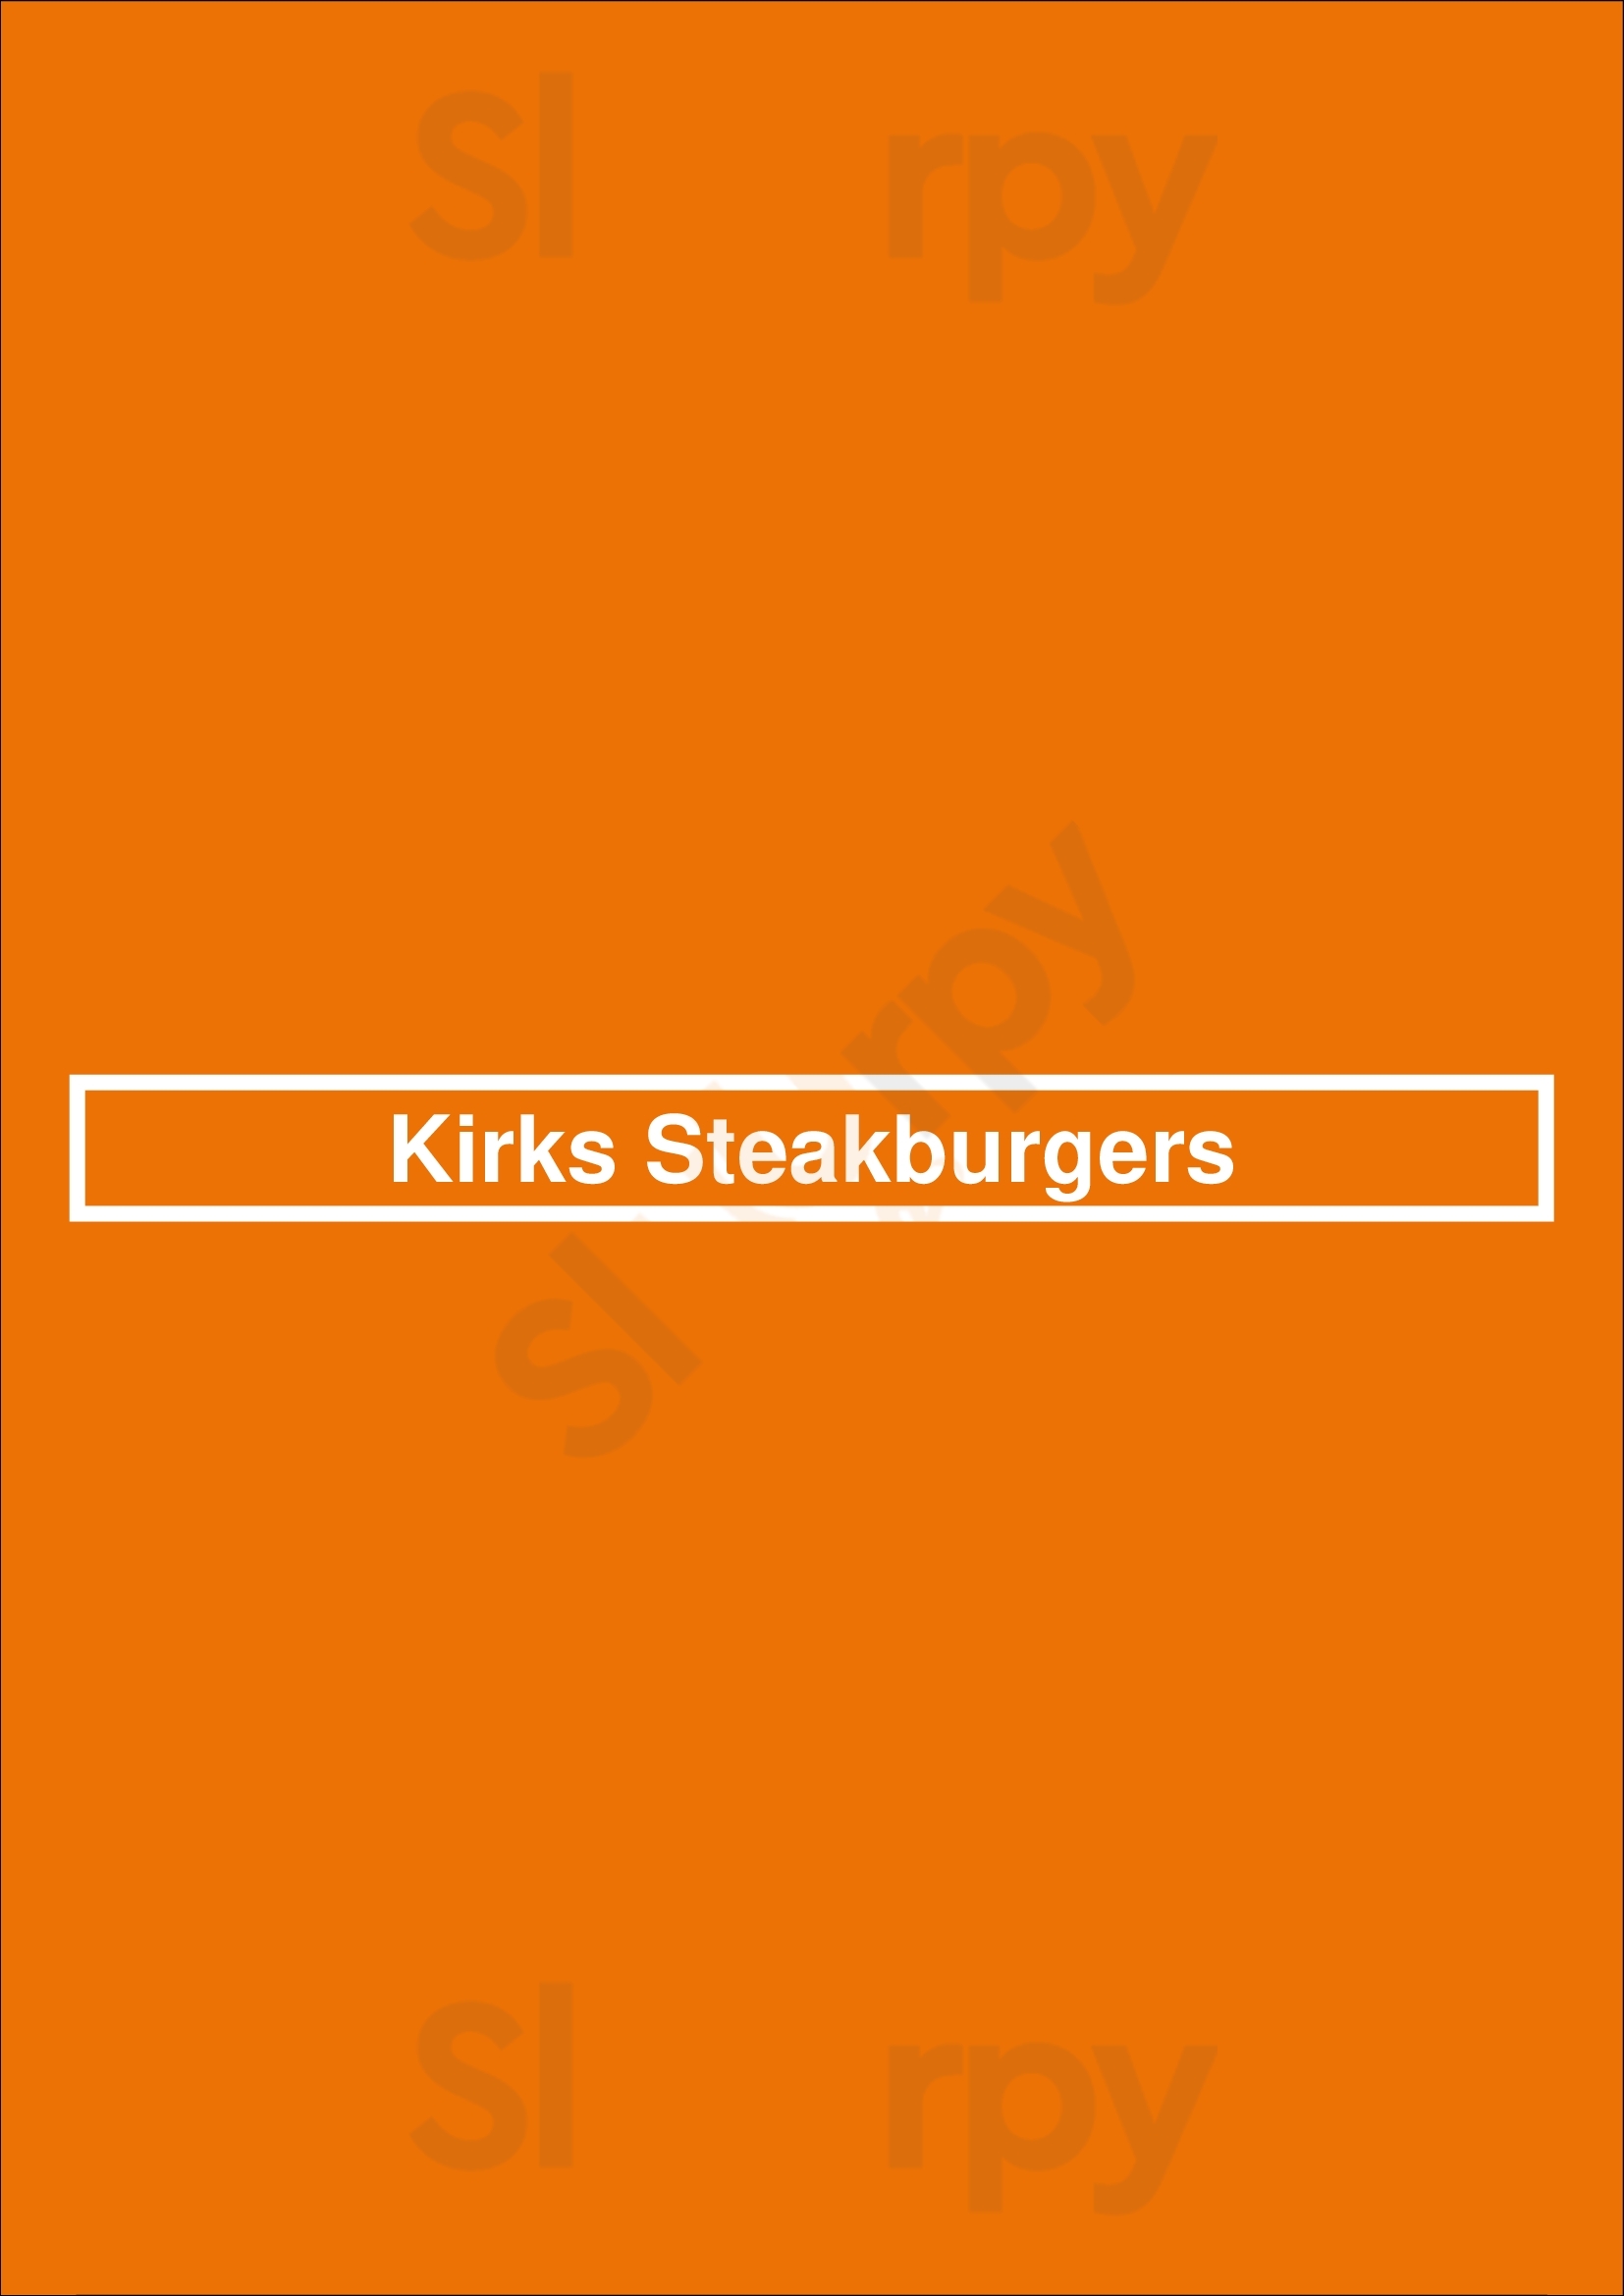 Kirks Steakburgers Campbell Menu - 1